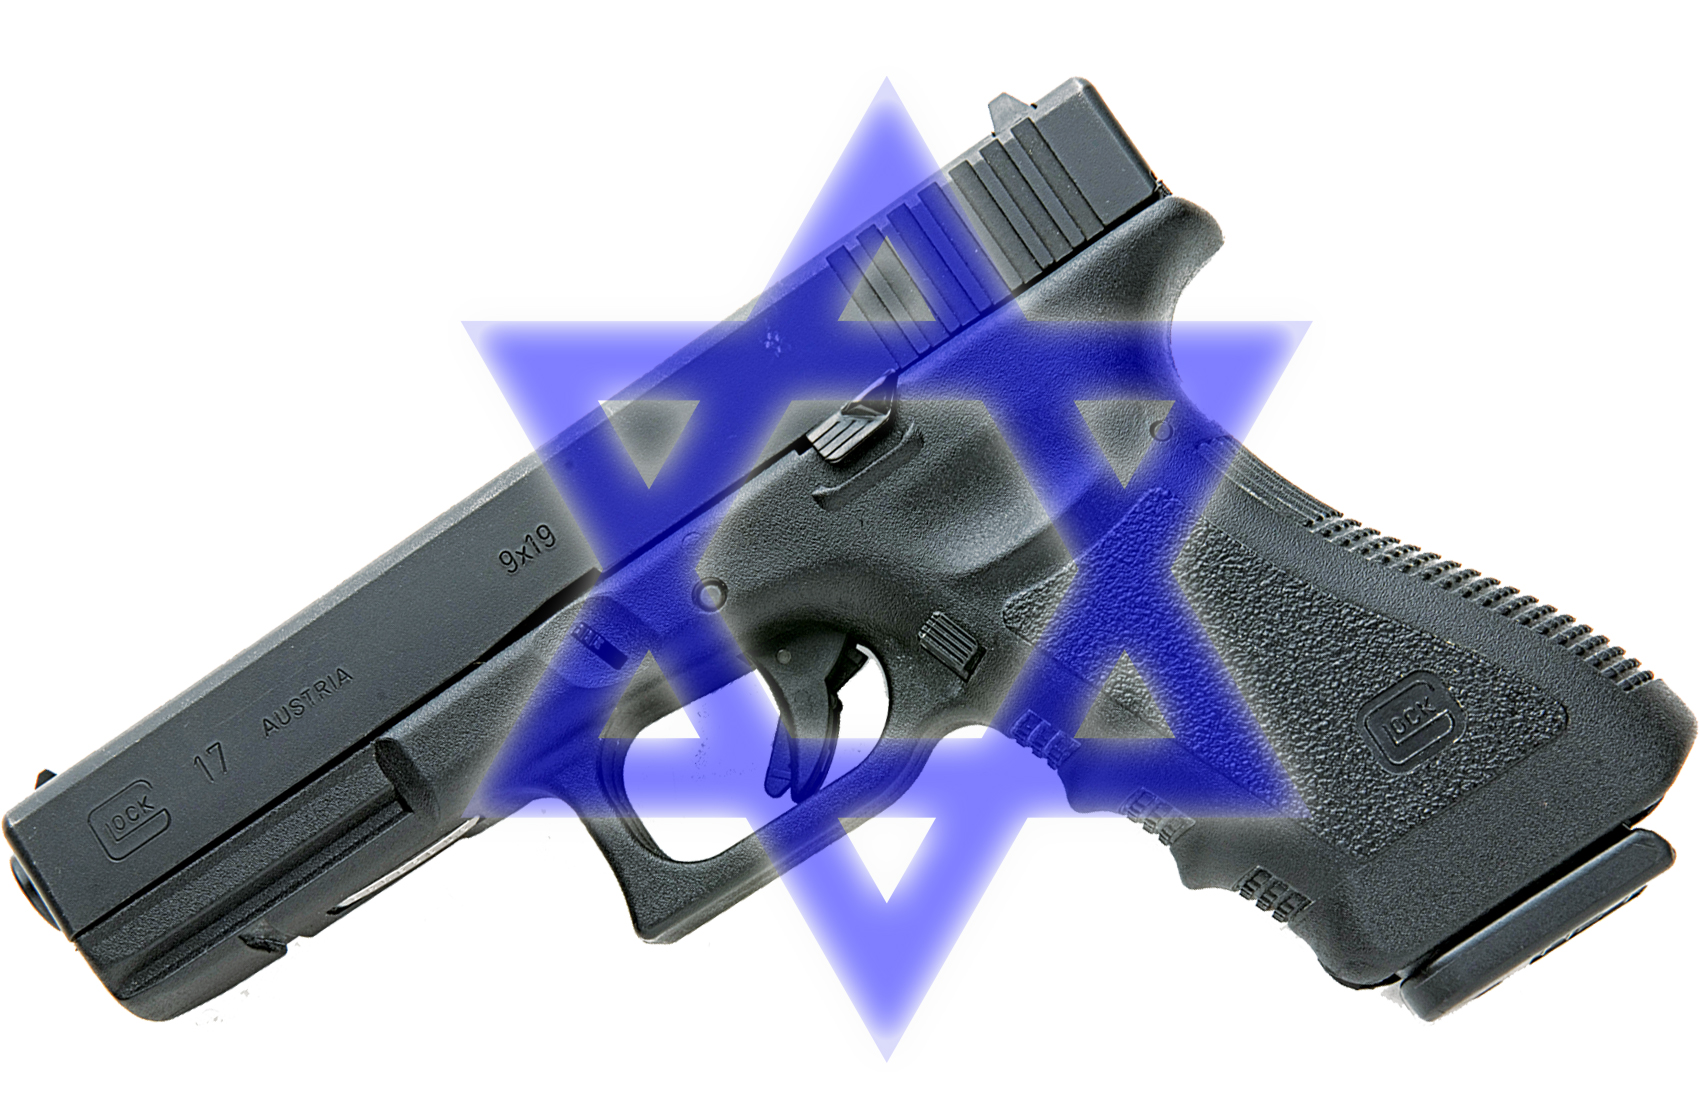 Let European Jews Carry Guns: Rabbi